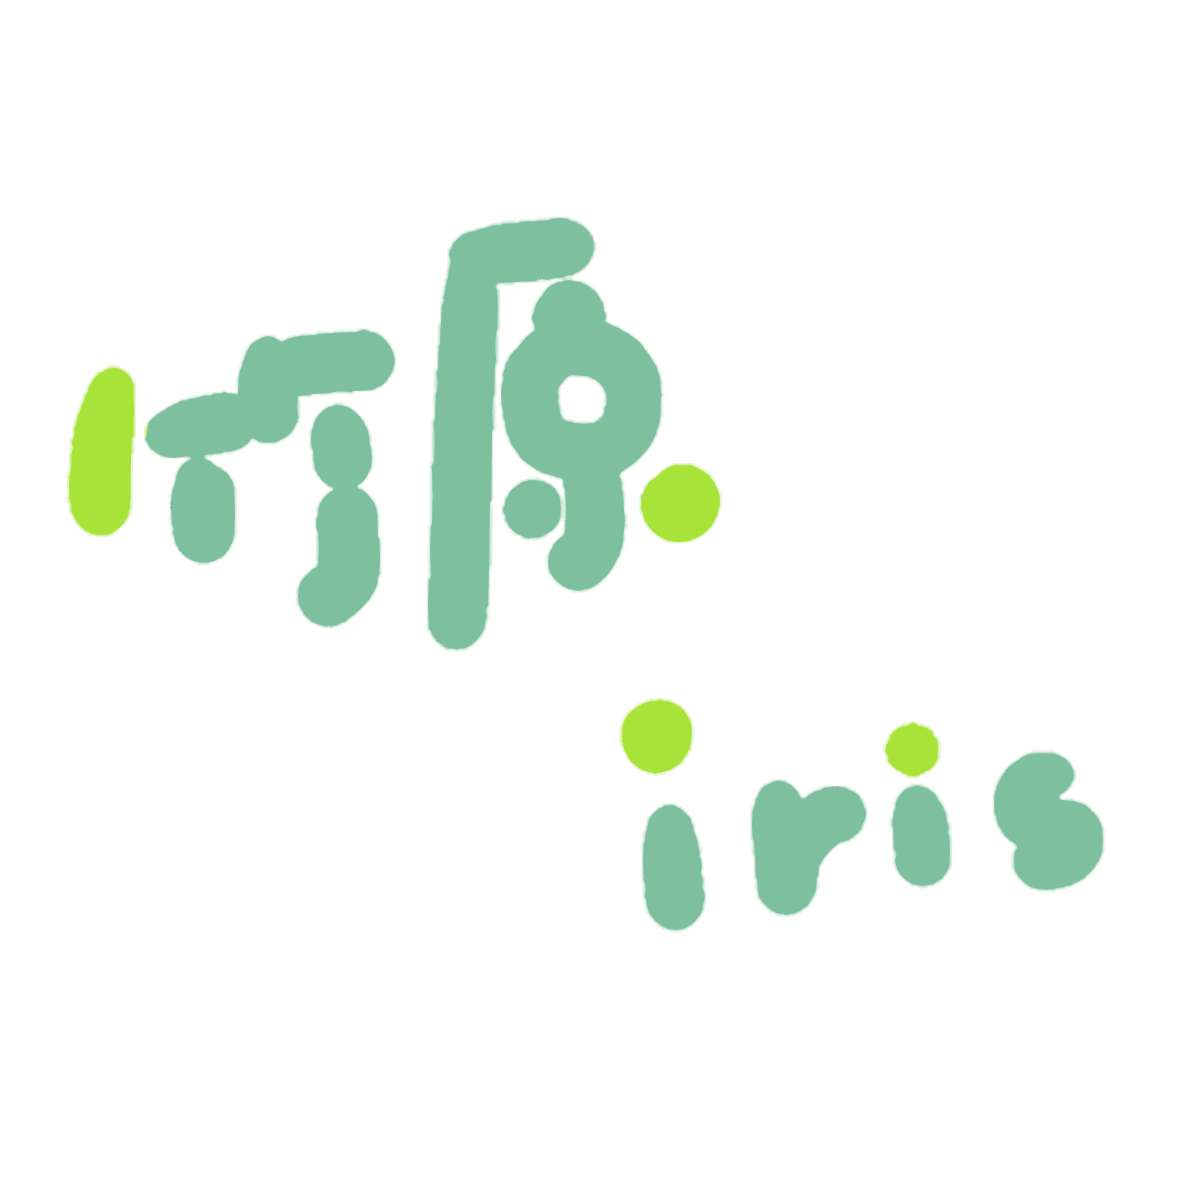 竹原iris logo.png